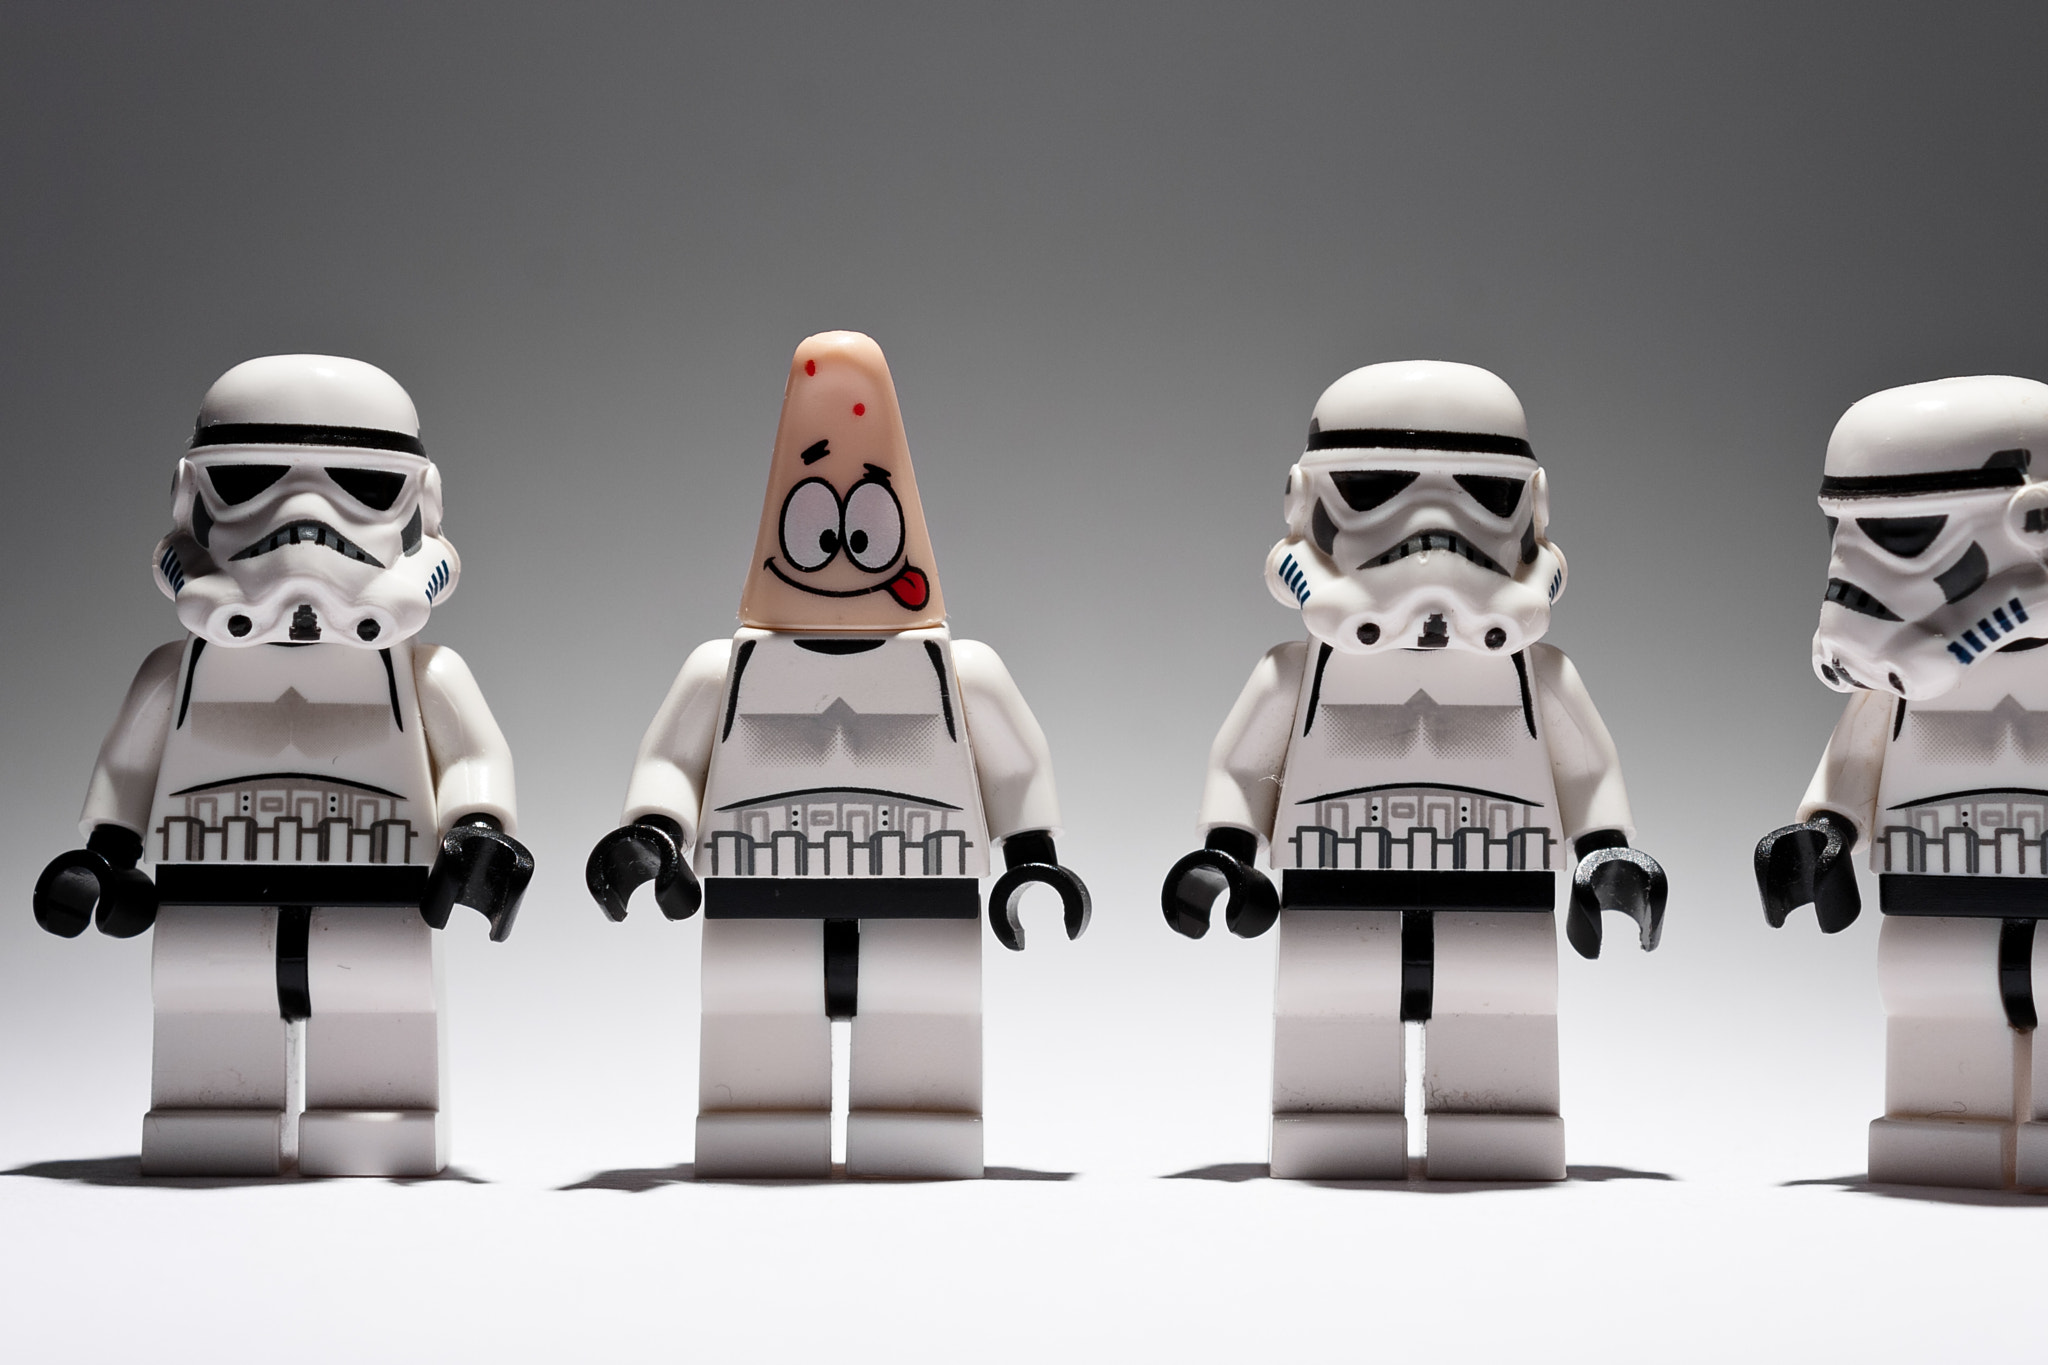 General 2048x1365 Star Wars LEGO toys humor gray background Imperial Stormtrooper Patrick (Spongebob Squarepants)